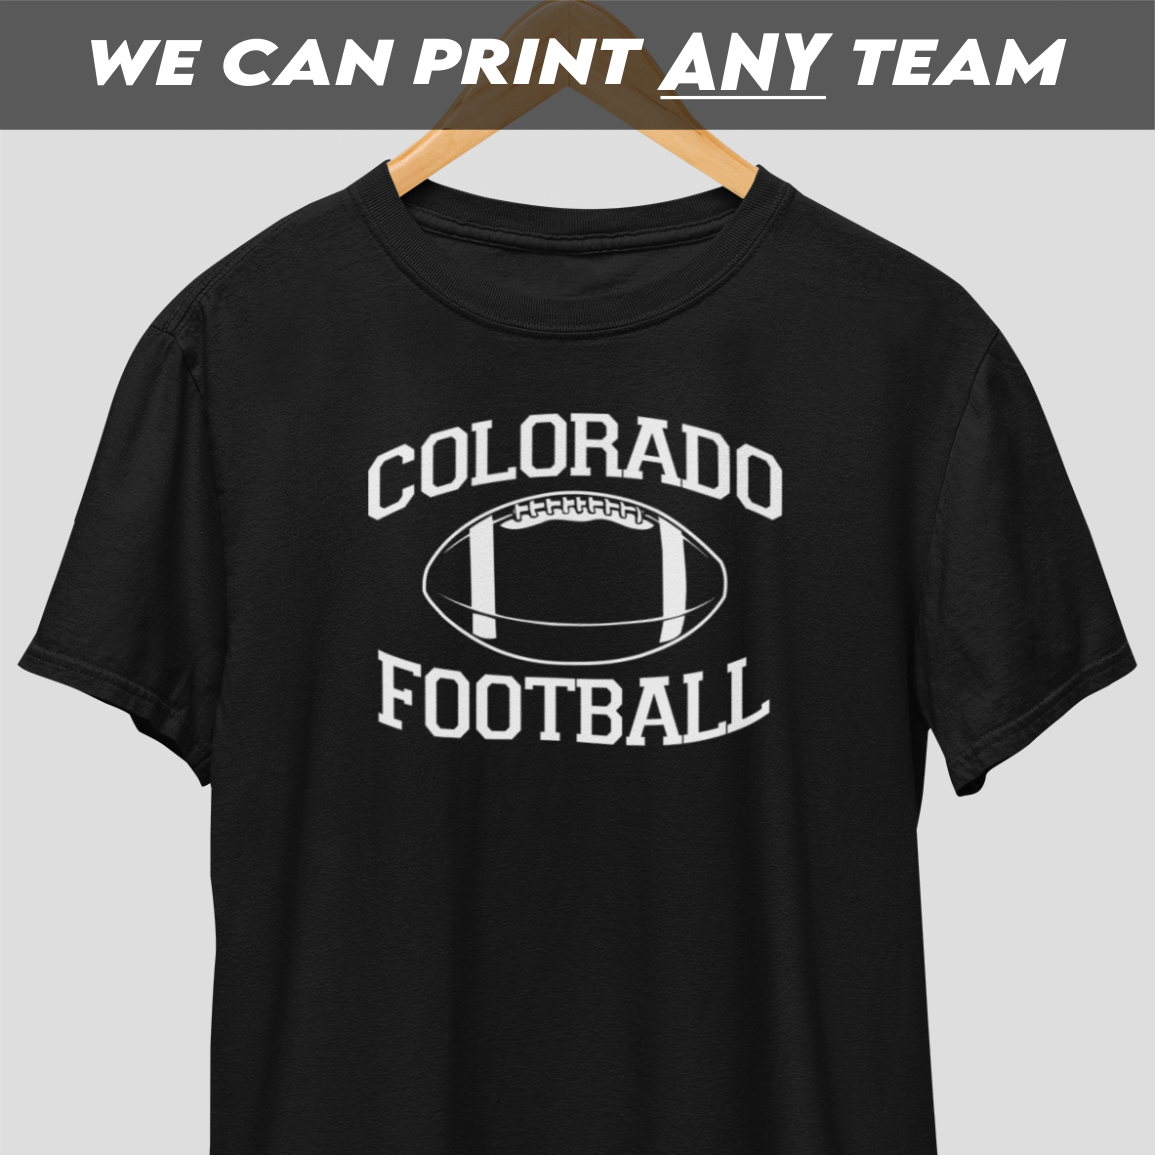 Colorado Football White Print T-Shirt